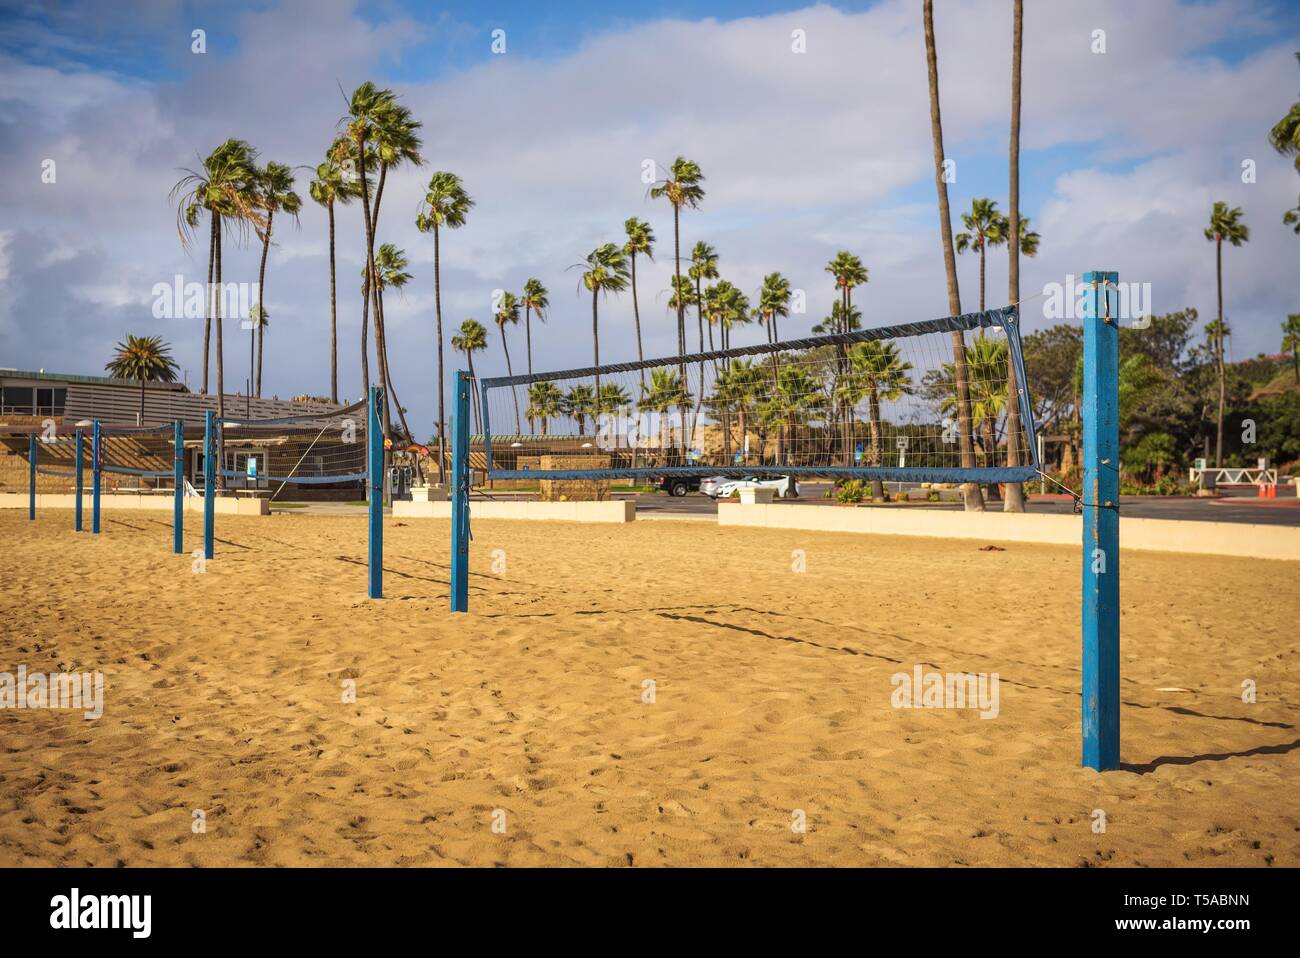 Filets de beach-volley sur la plage d'État Corona del Mar, près de Los Angeles Banque D'Images